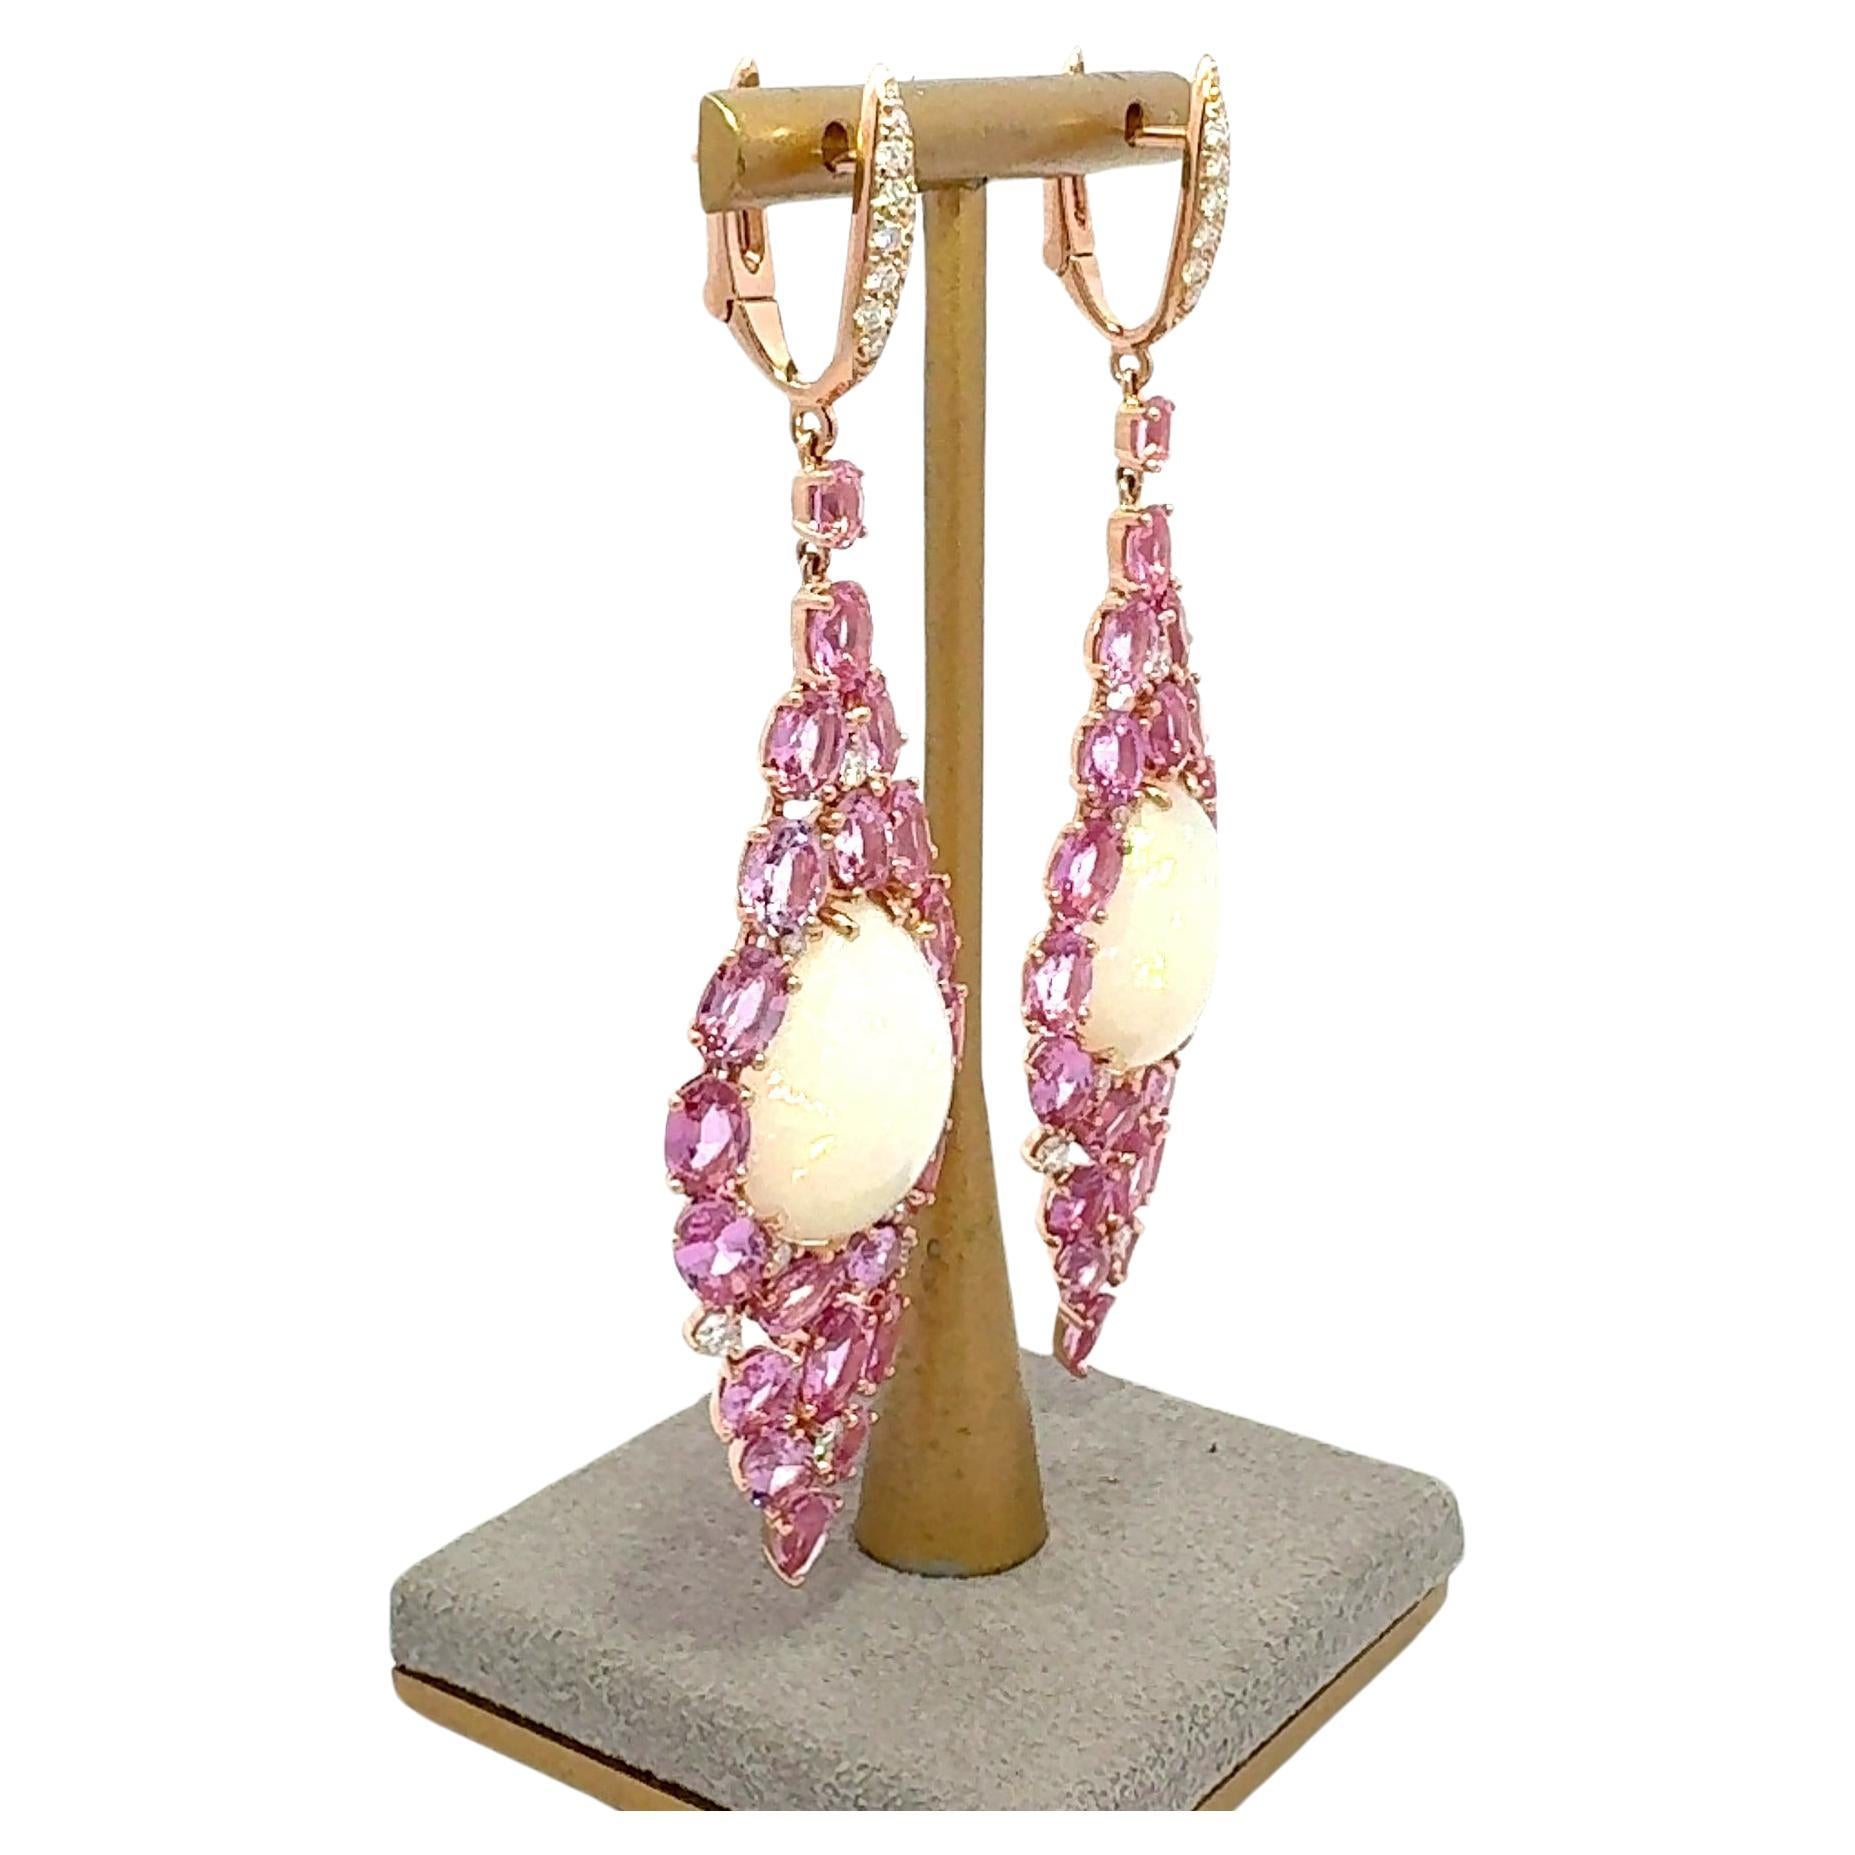 Chandeliers Diamond Pink Sapphire Opal 18K Yellow Gold Earrings For Her